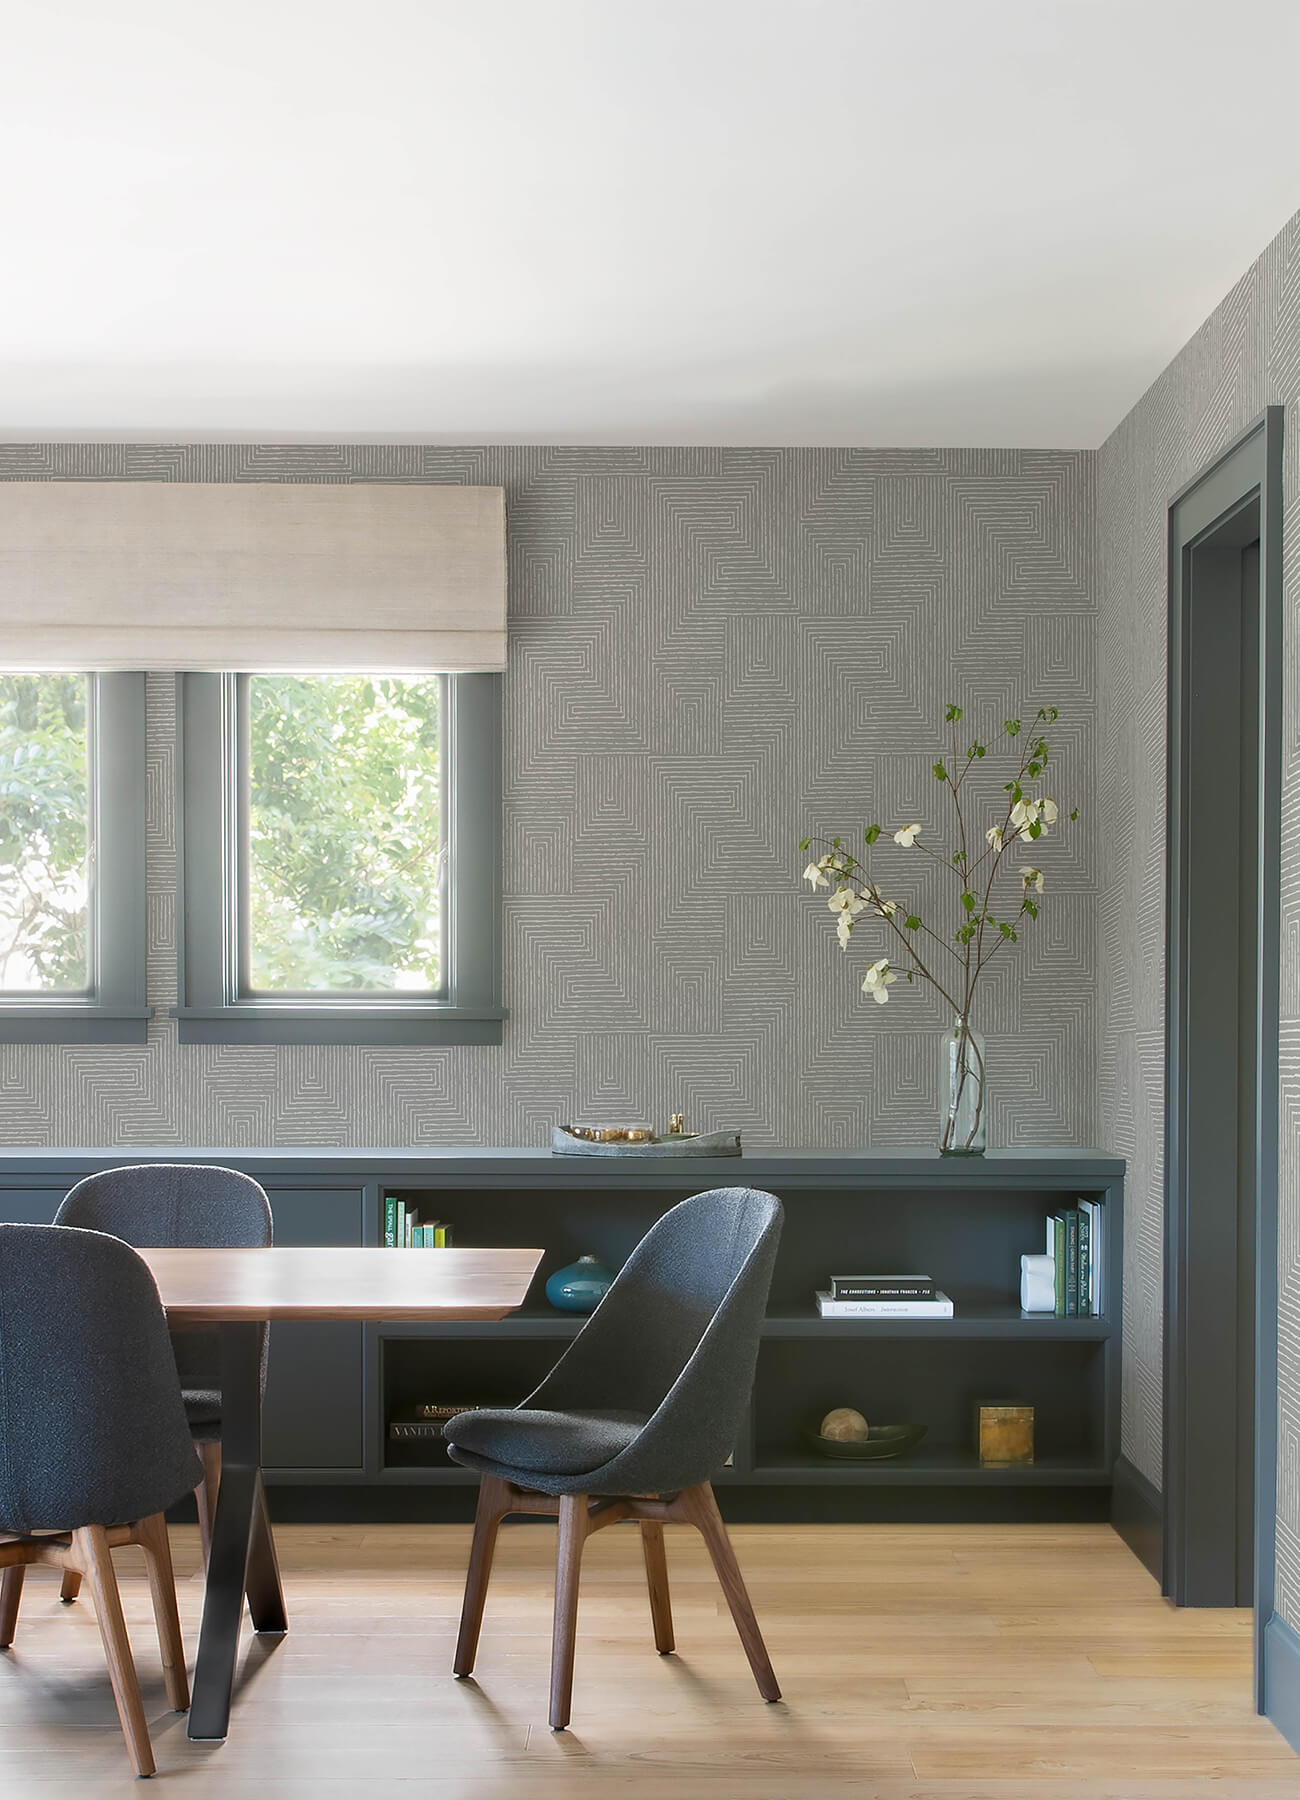 Dove Grey Fabric, Wallpaper and Home Decor